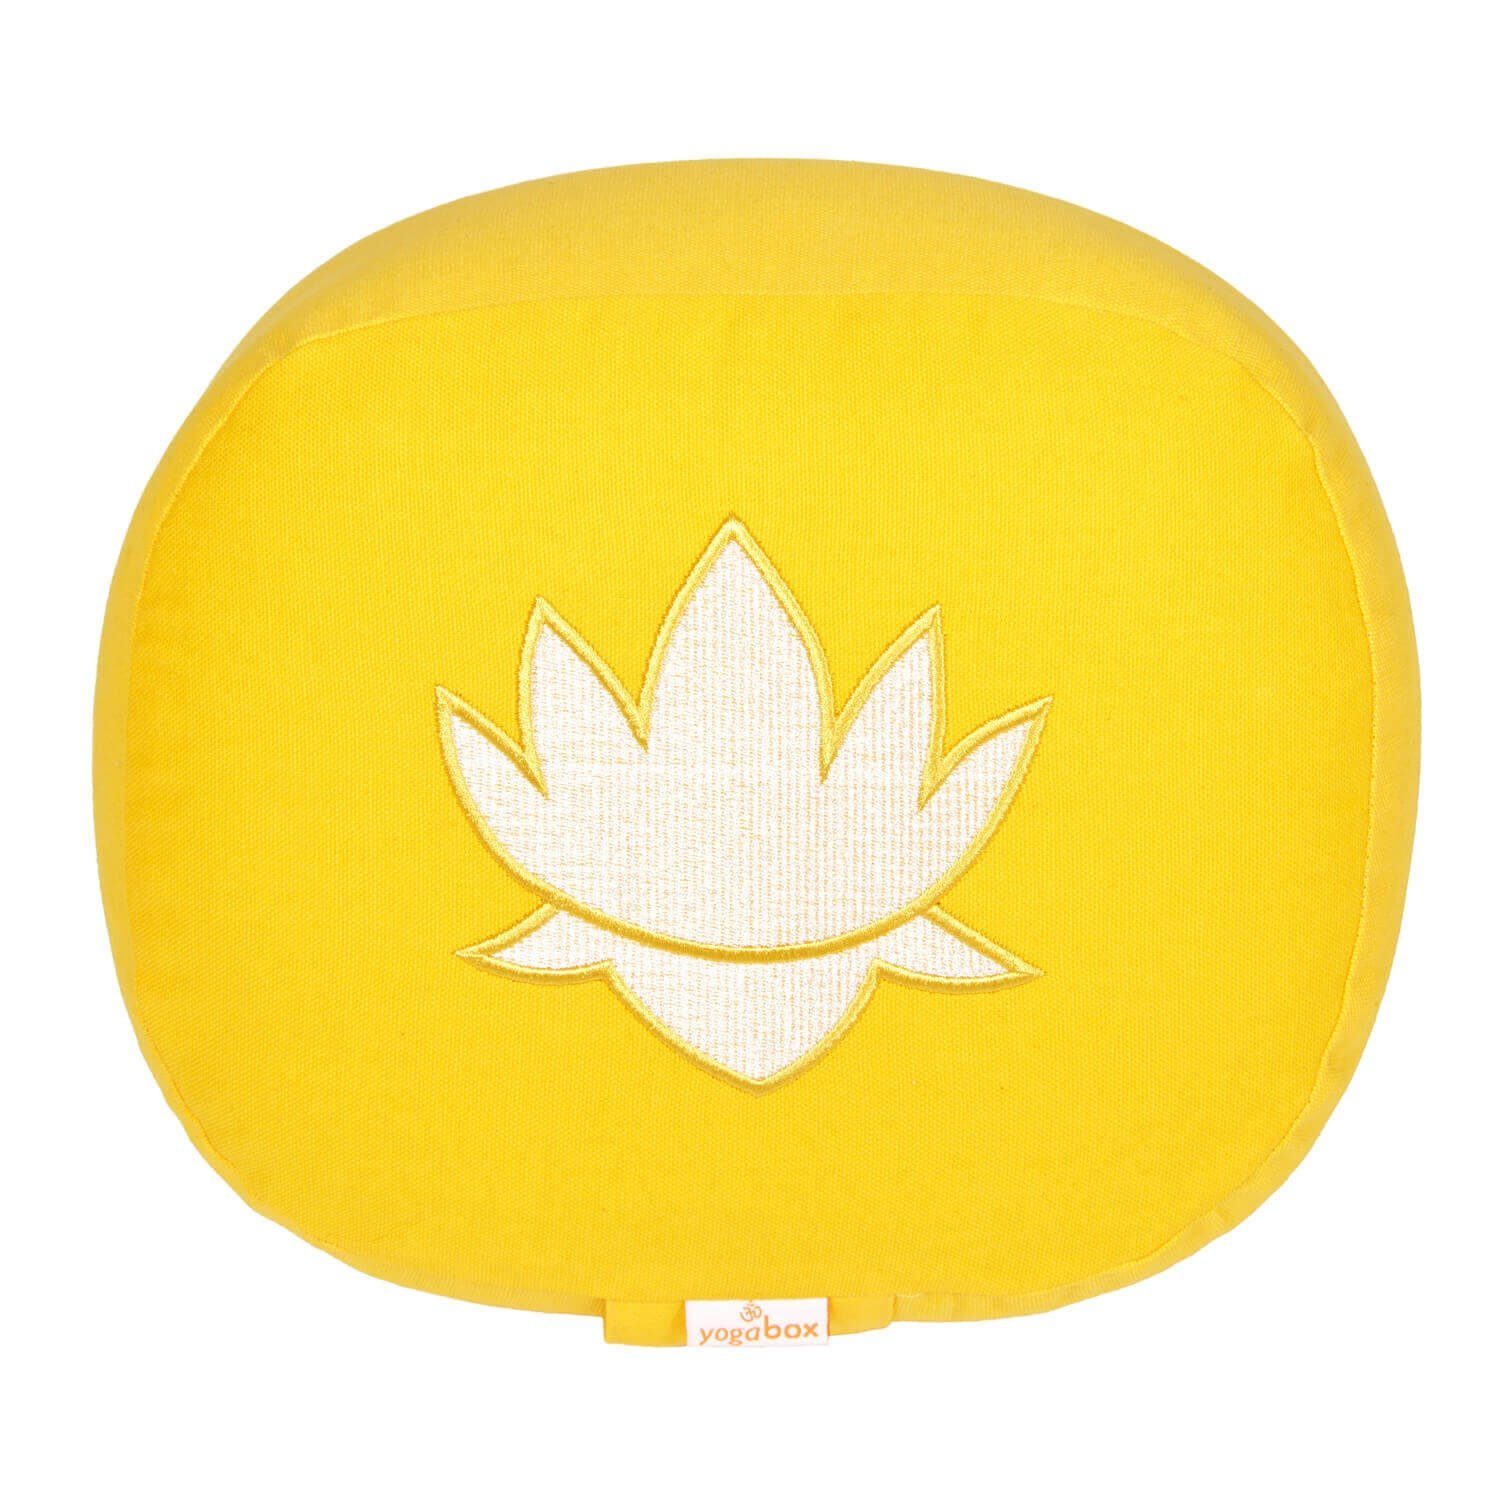 Lotus yogabox BASIC Stick oval dotter Yogakissen